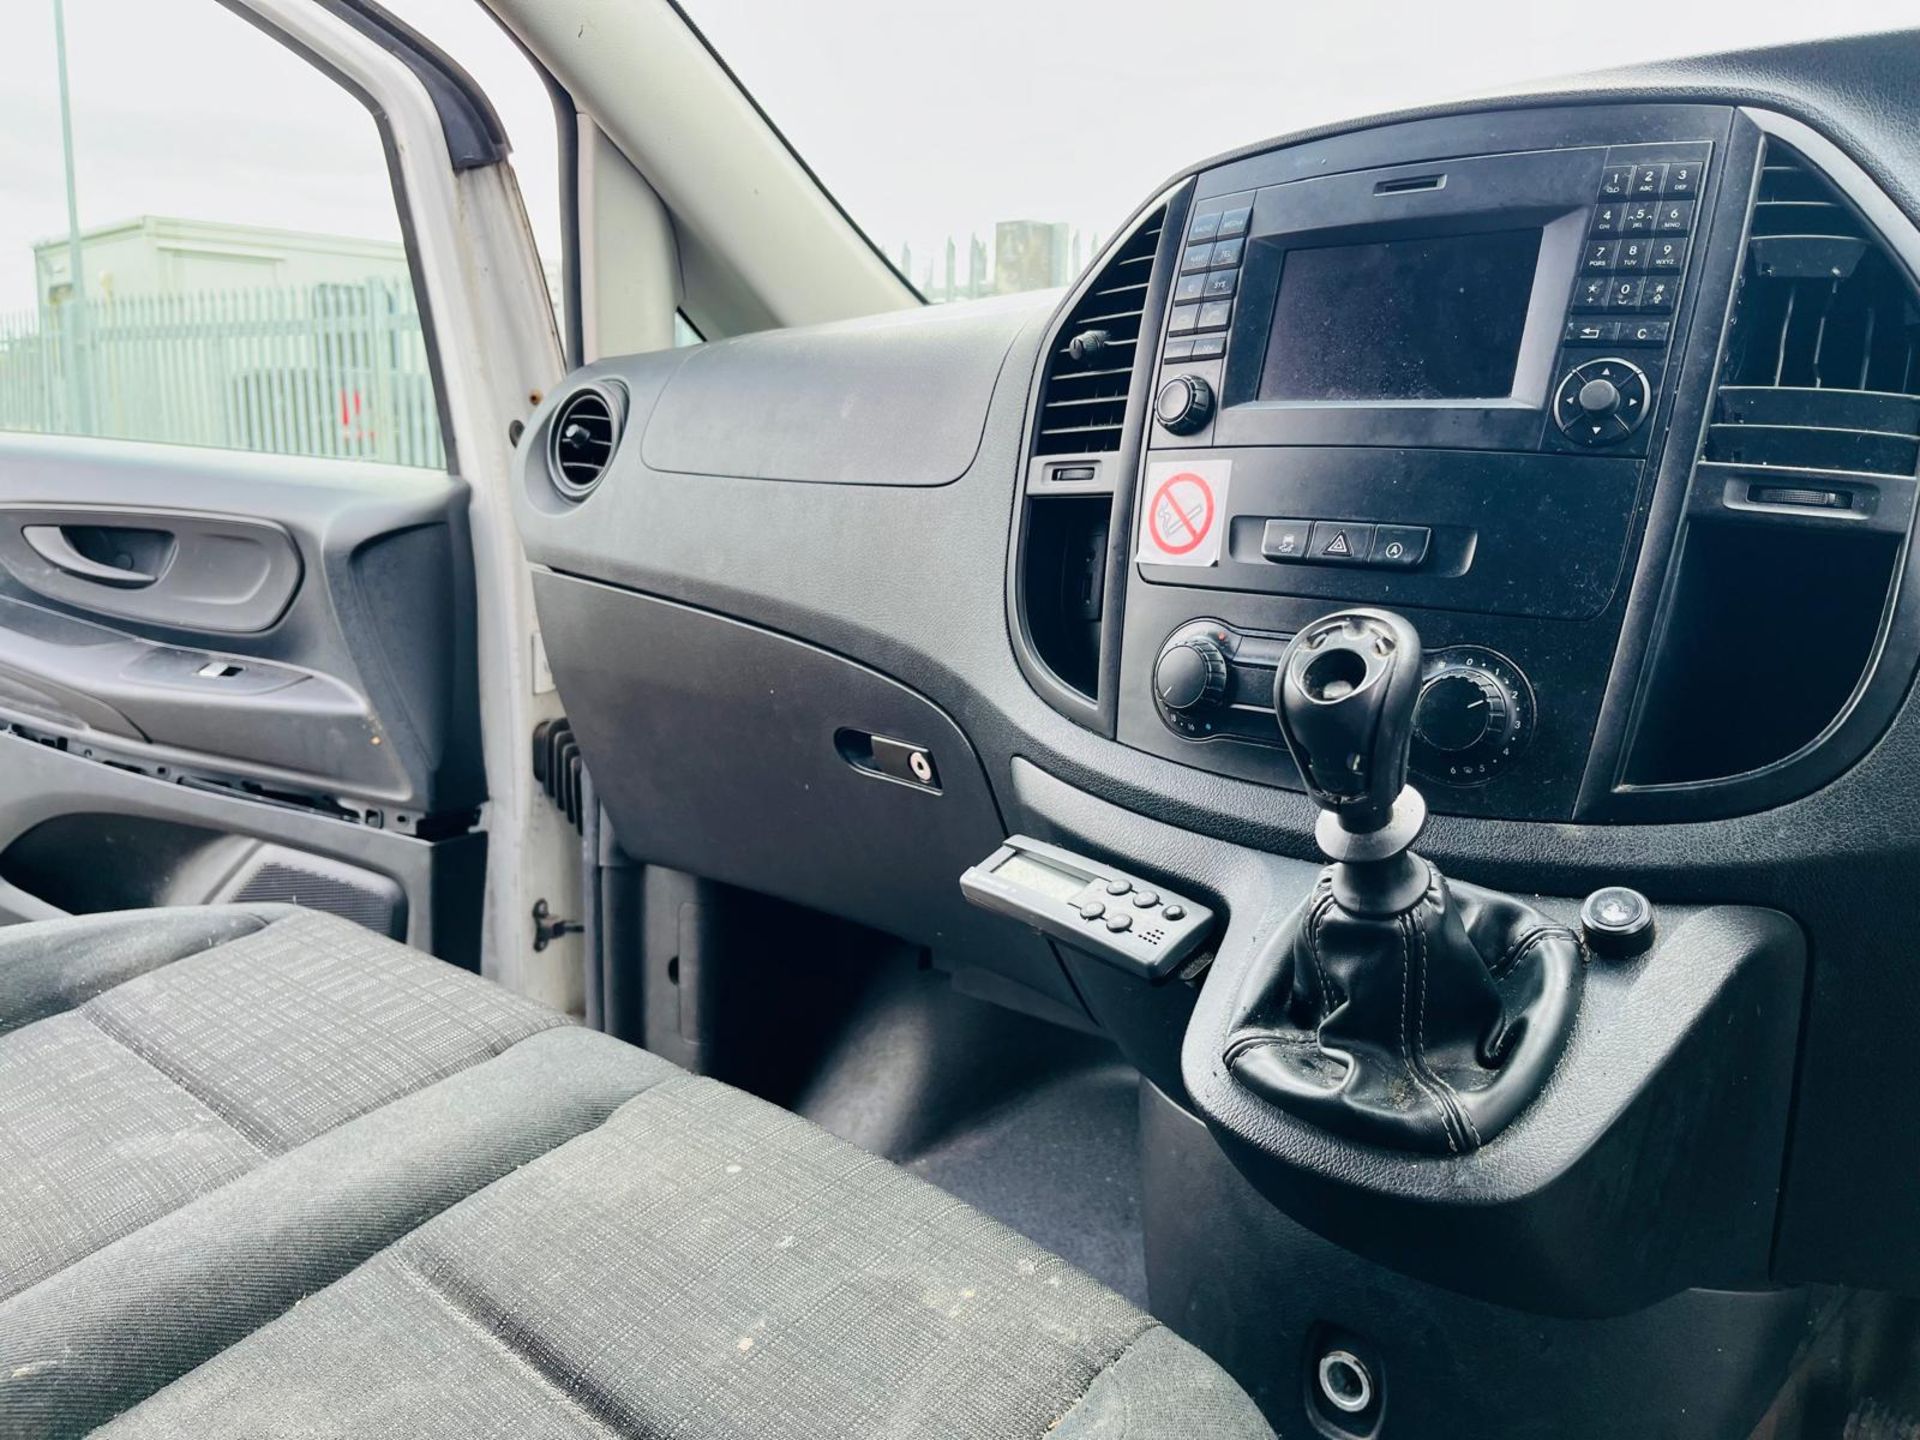 Mercedes Benz Vito 114 CDI RWD Fridge/Freezer 2.1 2019 '19 Reg '-ULEZ Compliant-Parking Sensors-A/C - Image 20 of 27